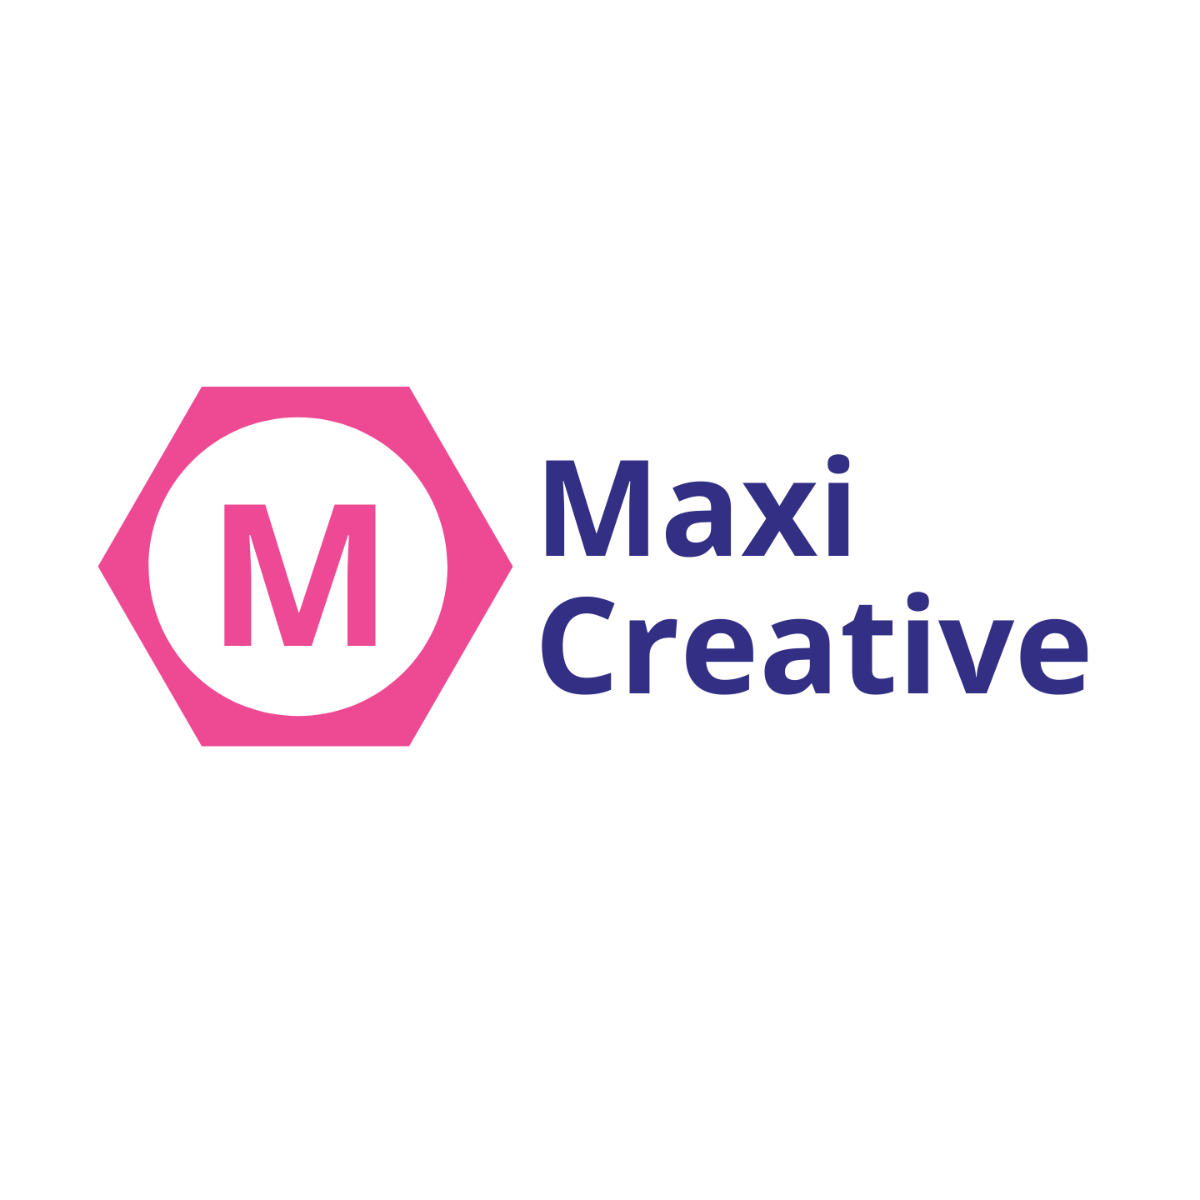 Creative Agency Logo Template